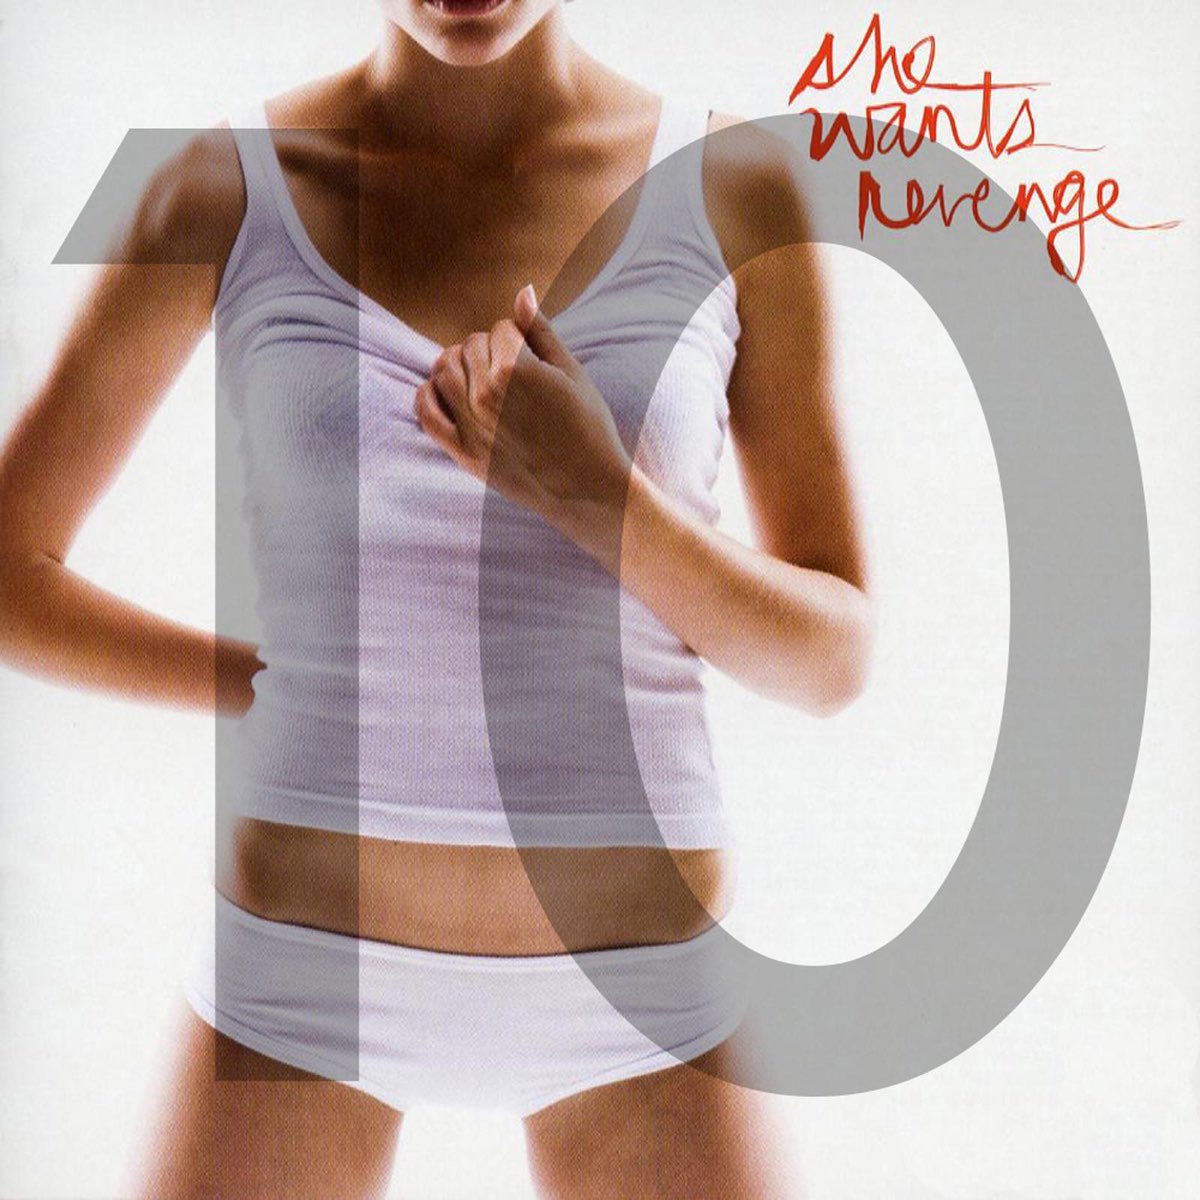 She wants ready. She wants Revenge album. She wants обложка. She wants Revenge album Cover. She wants Revenge she wants Revenge.